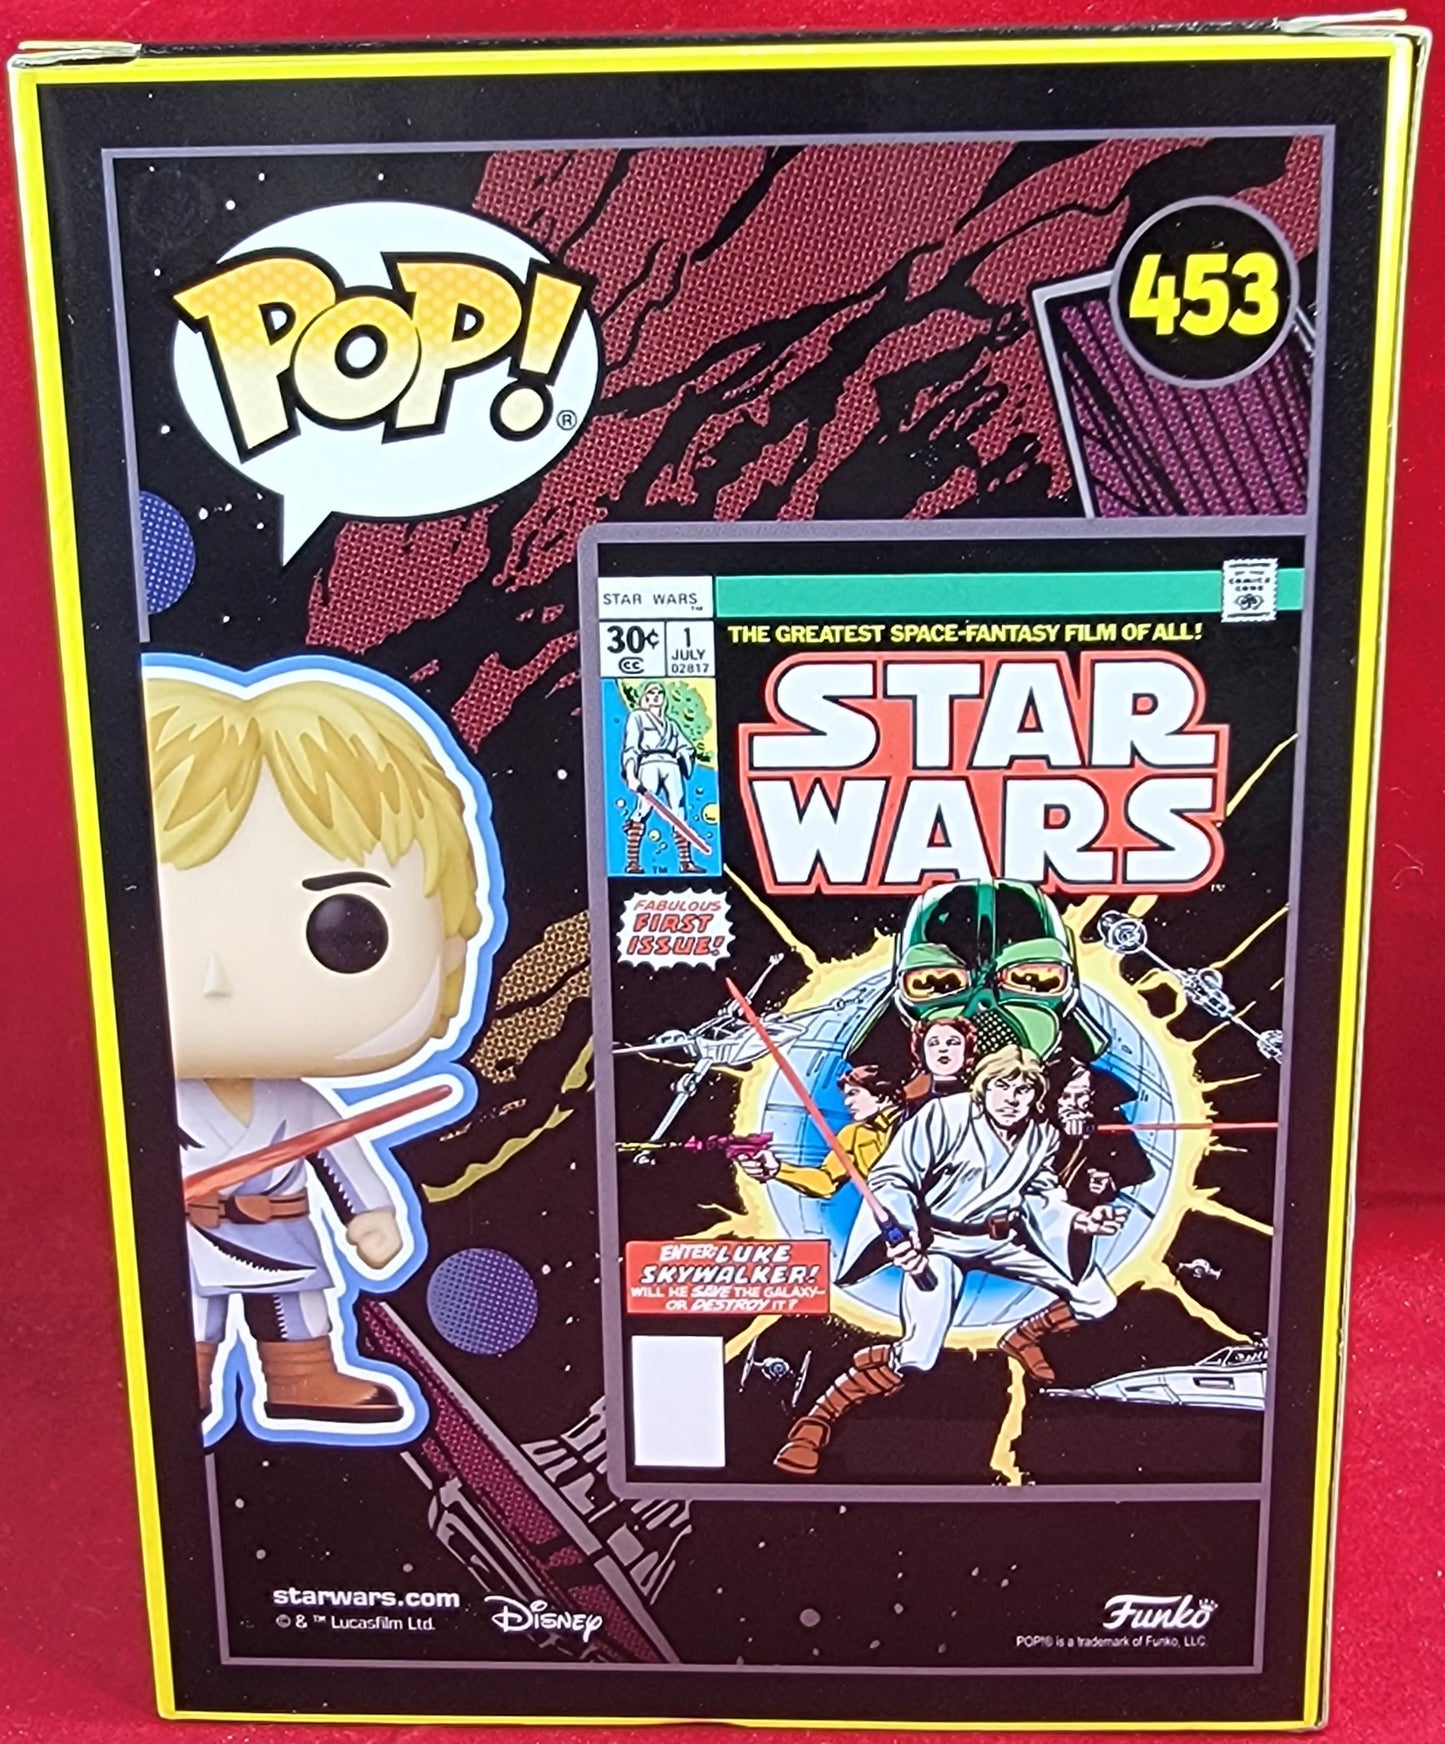 Luke Skywalker target exclusive Funko # 453 Star Wars Pop (nib)